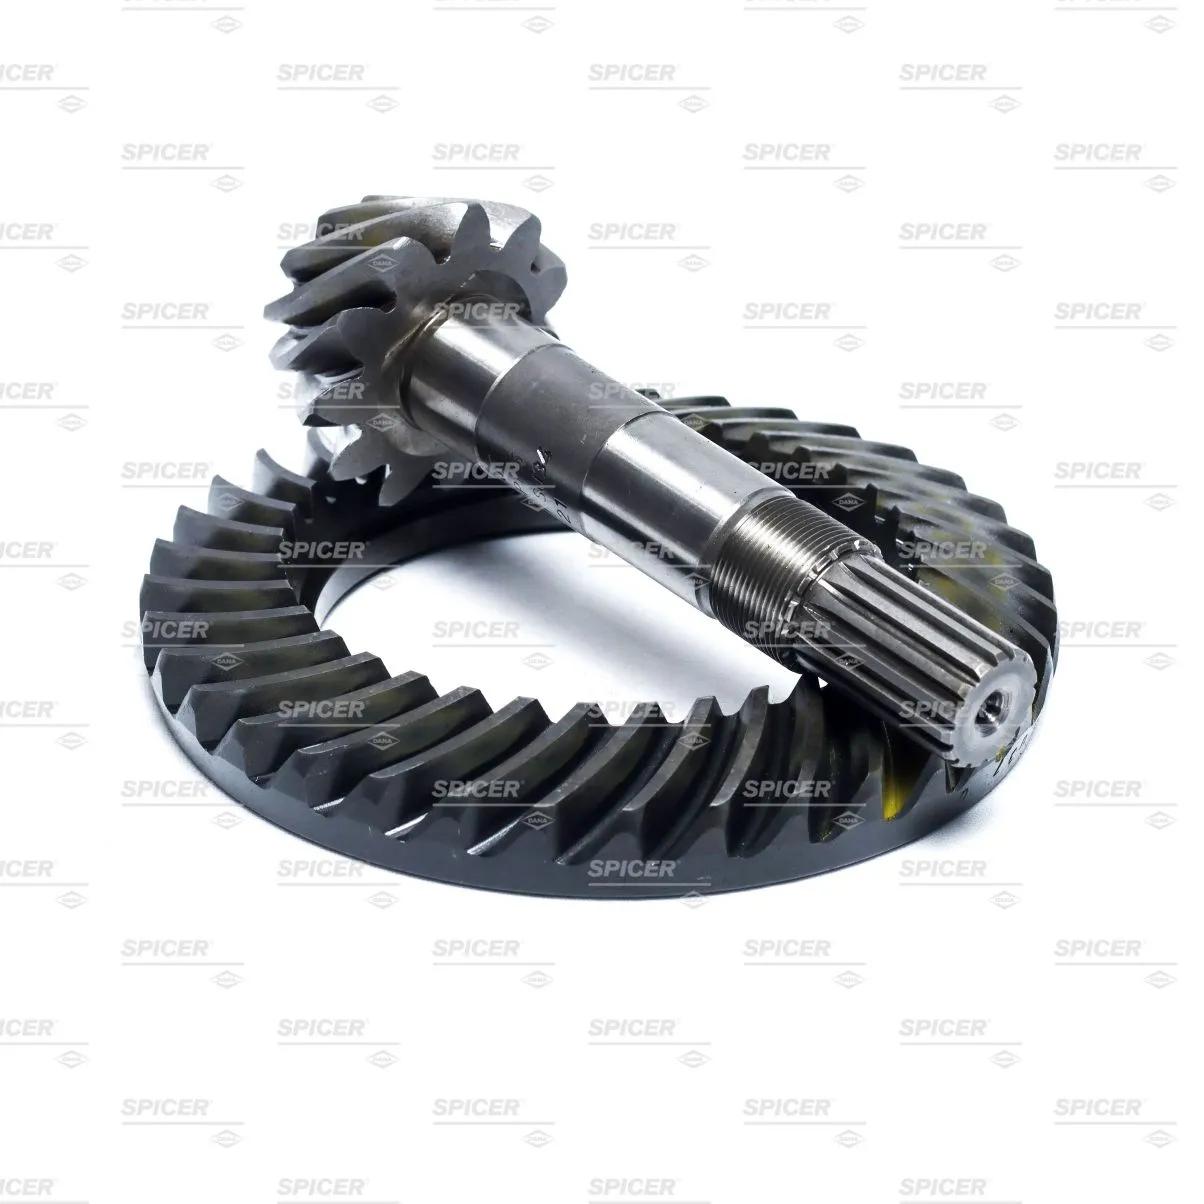 Spicer + Axle + Gears + Crown Wheel Pinion + S20GA123-X_SP + buy